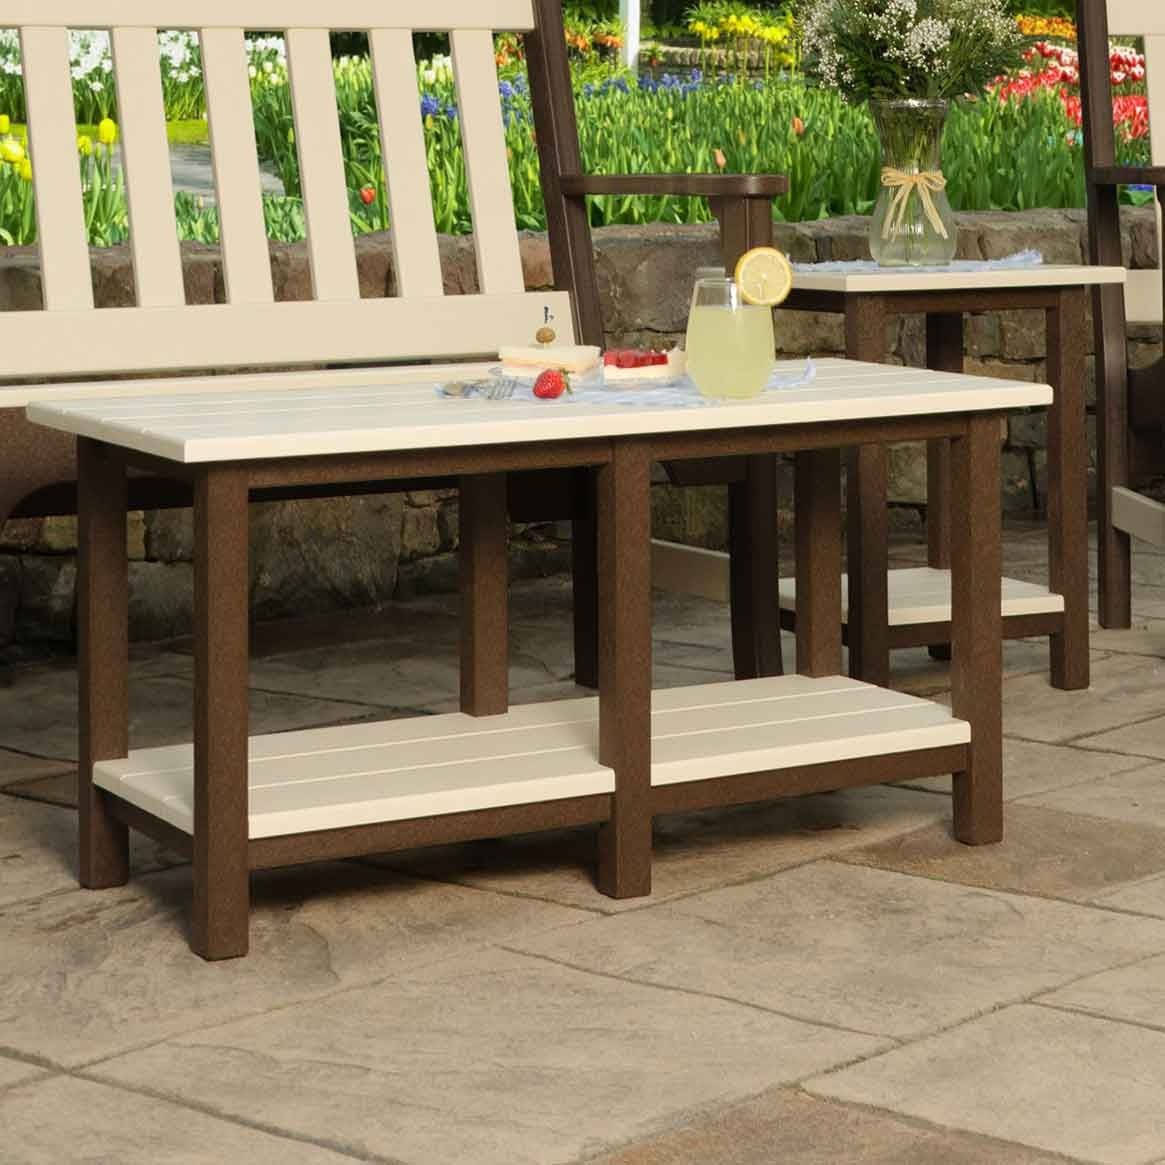 Avonlea Garden Coffee Table - snyders.furniture